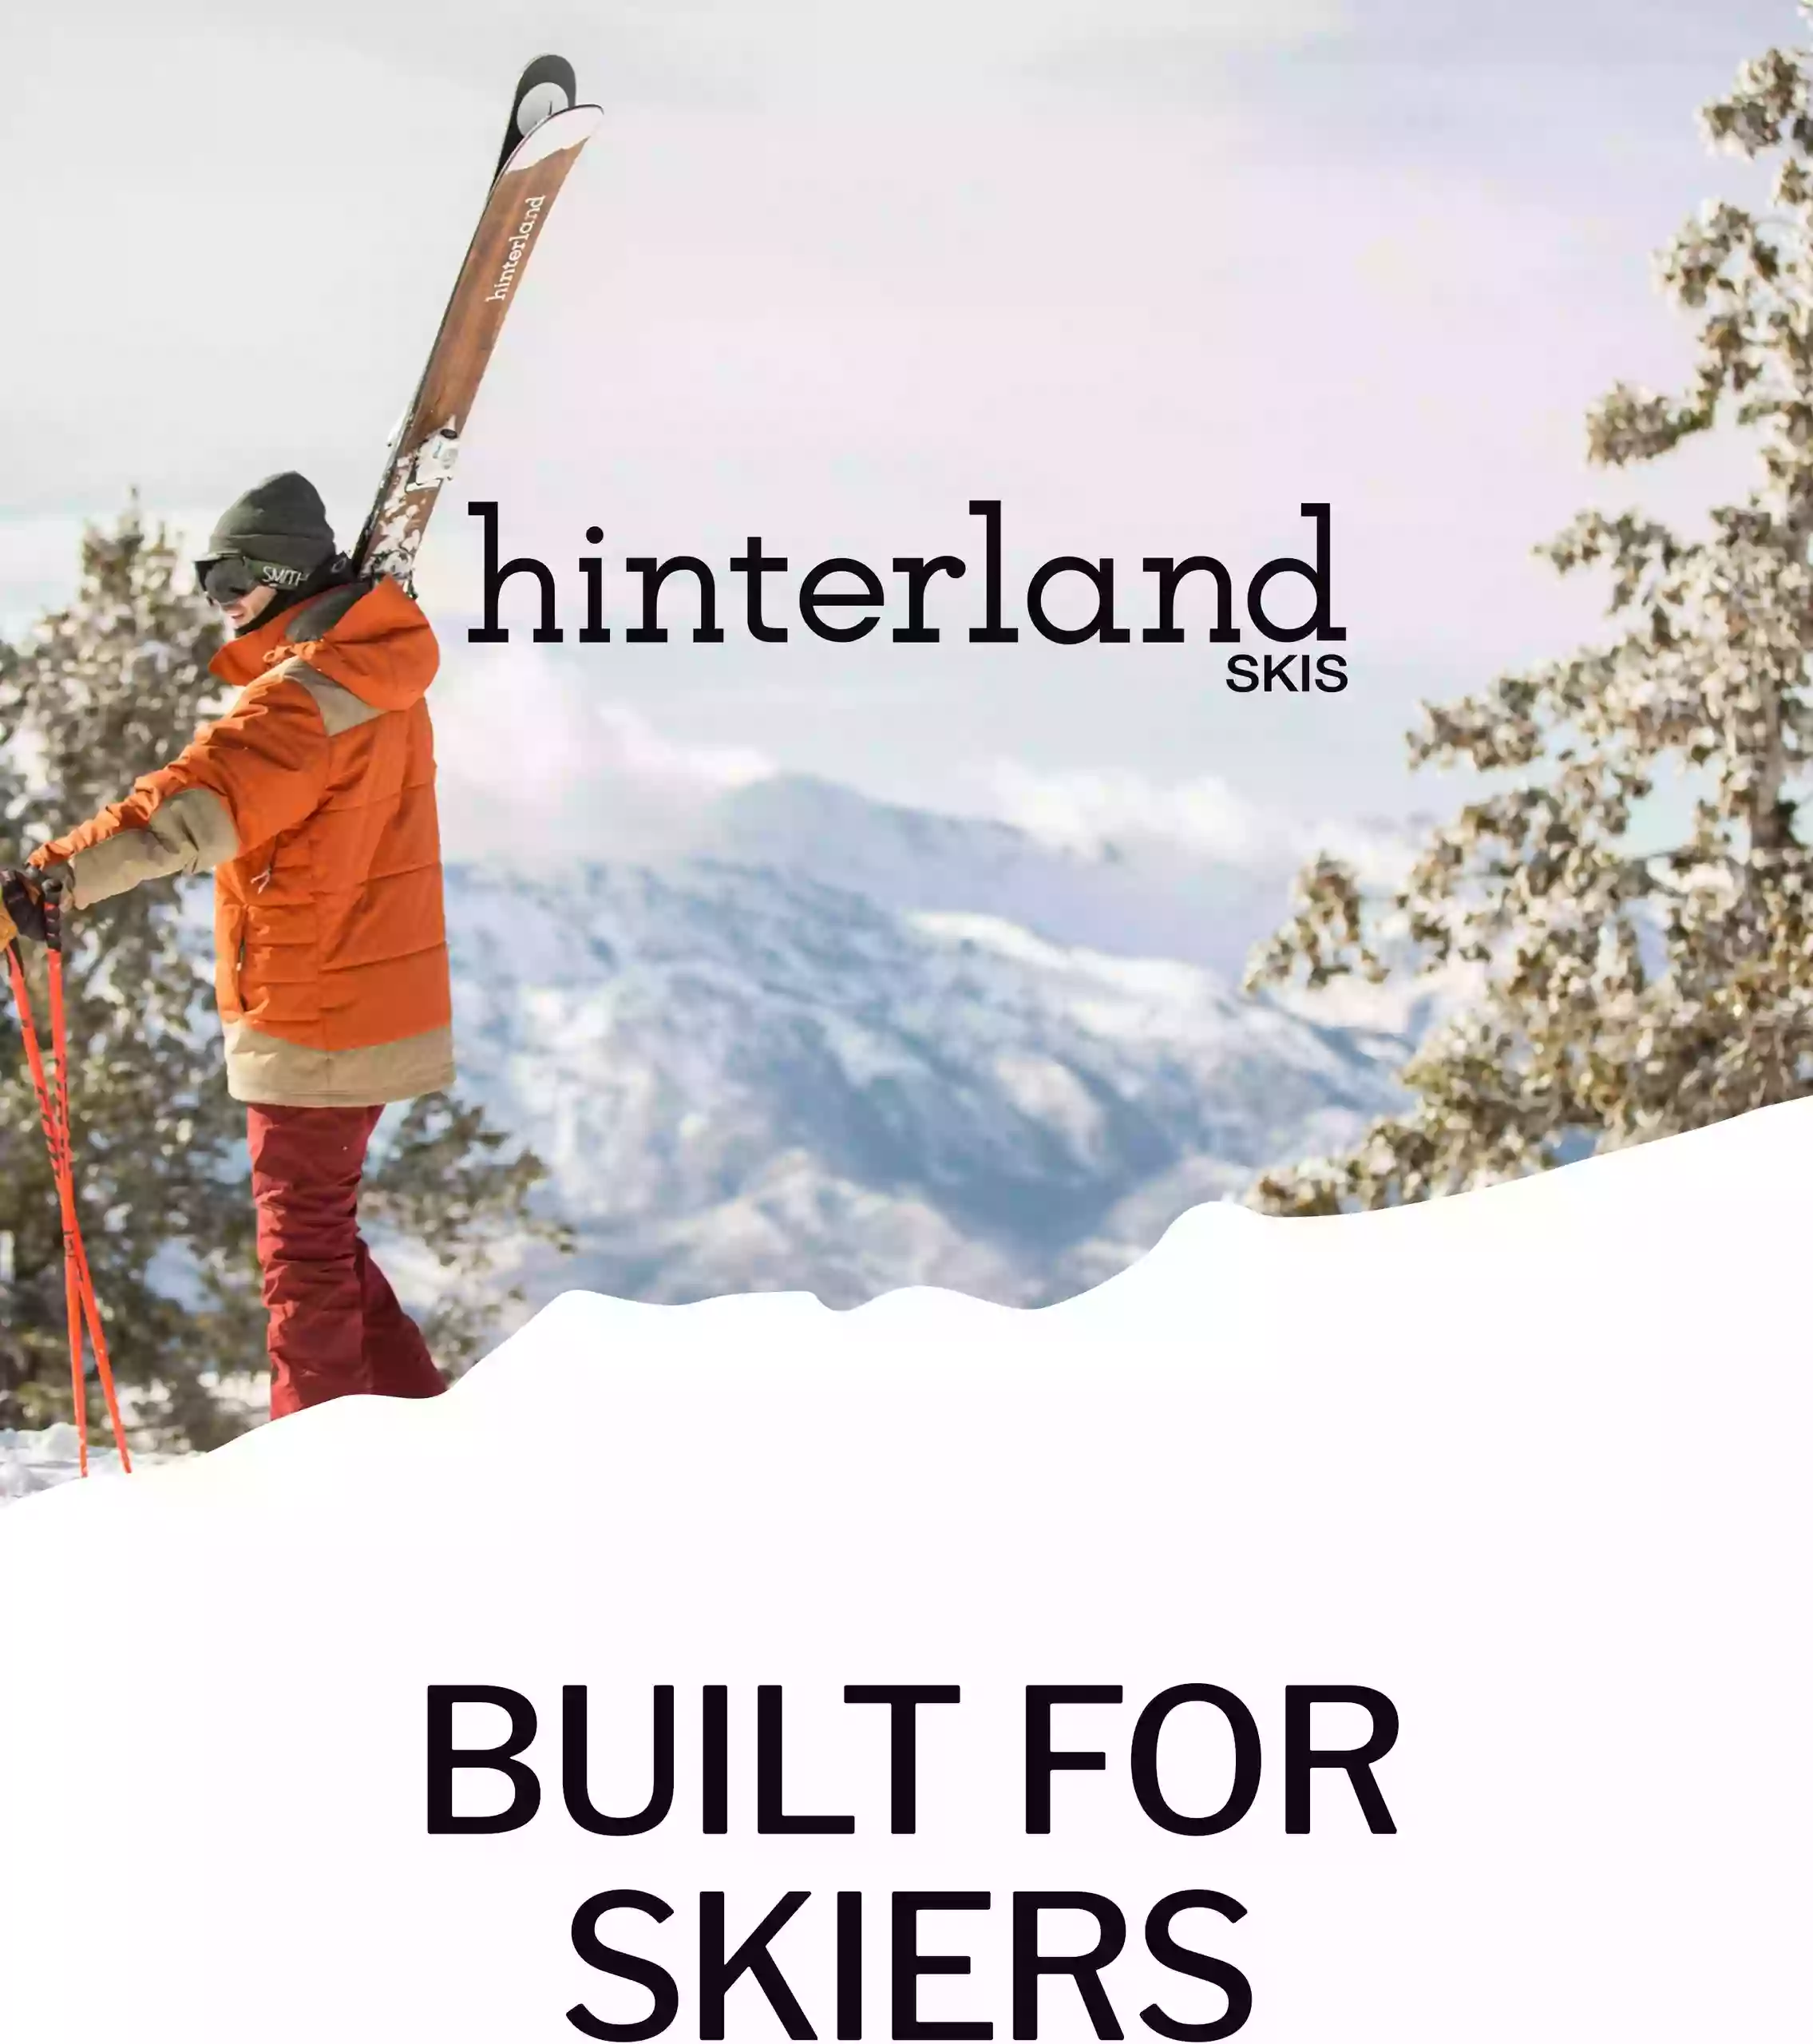 Hinterland Skis